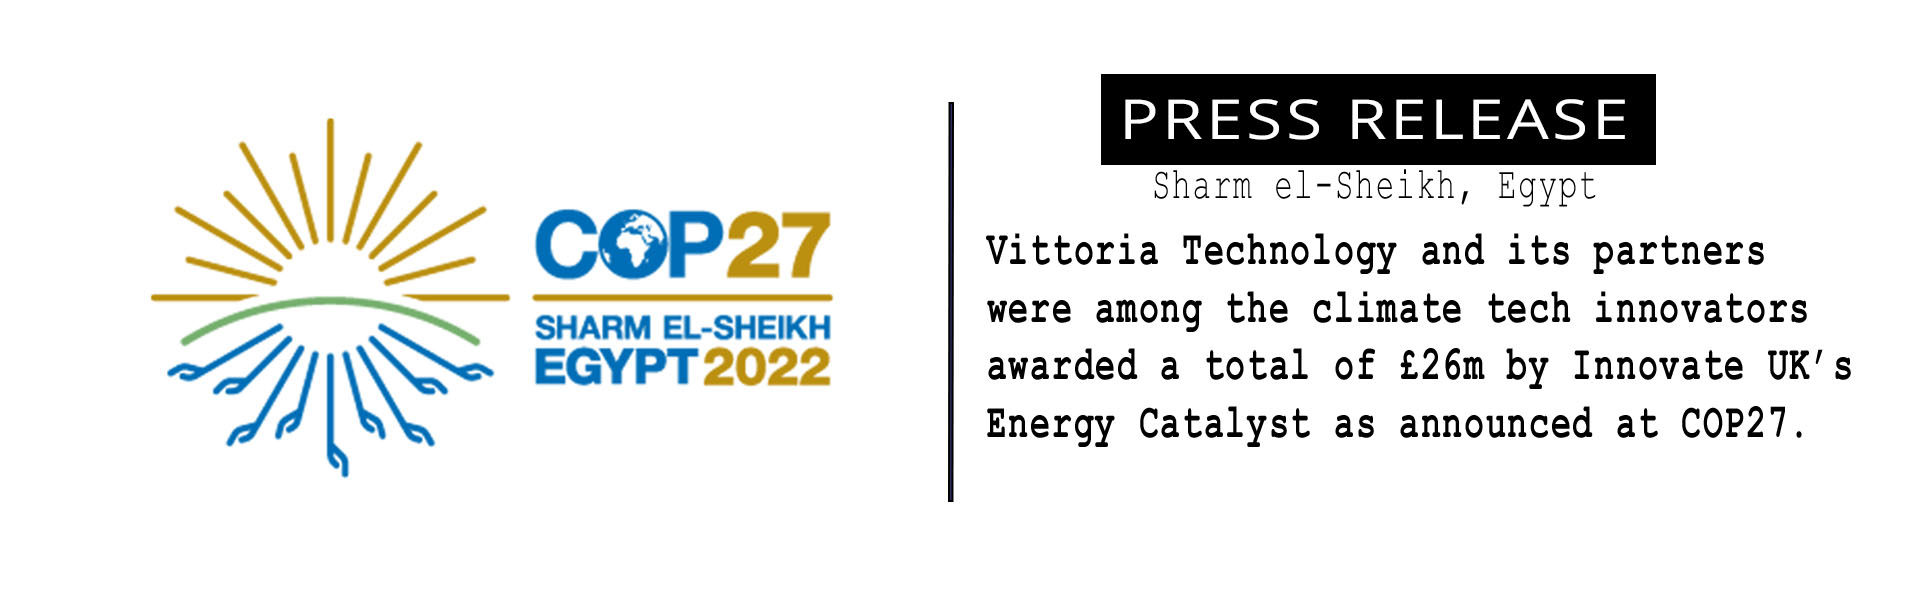 Energy Catalyst Announcement at COP27